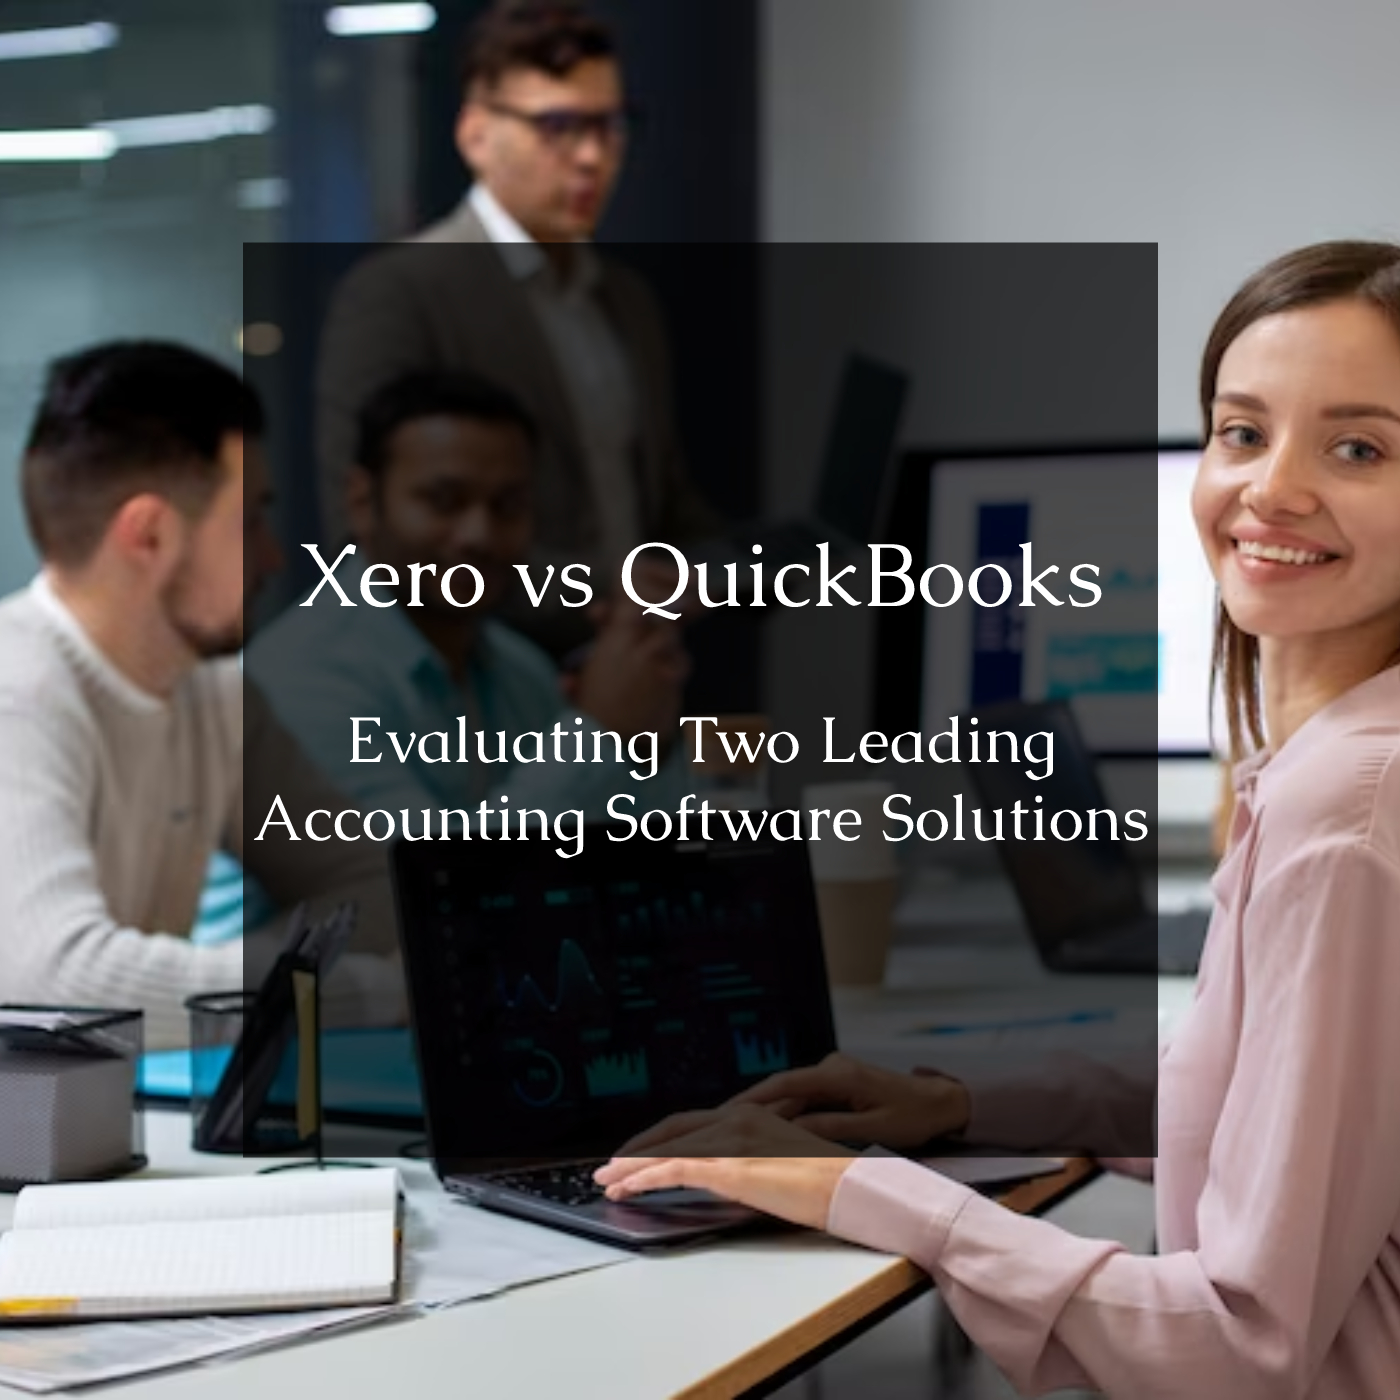 Xero vs QuickBooks